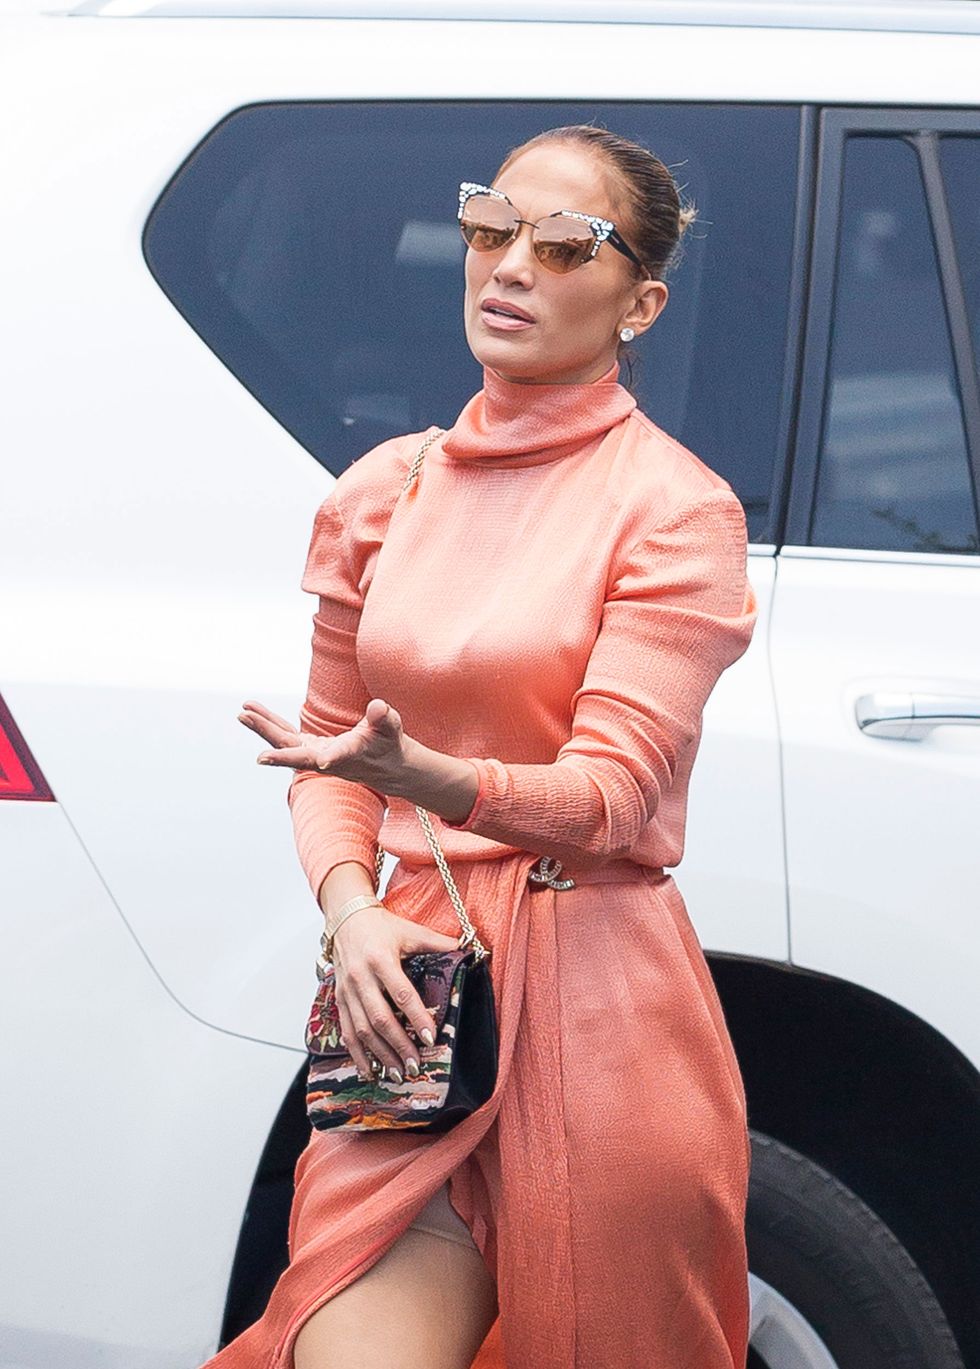 Jennifer Lopez Photographed Wearing Spanx Under Dress In Miami